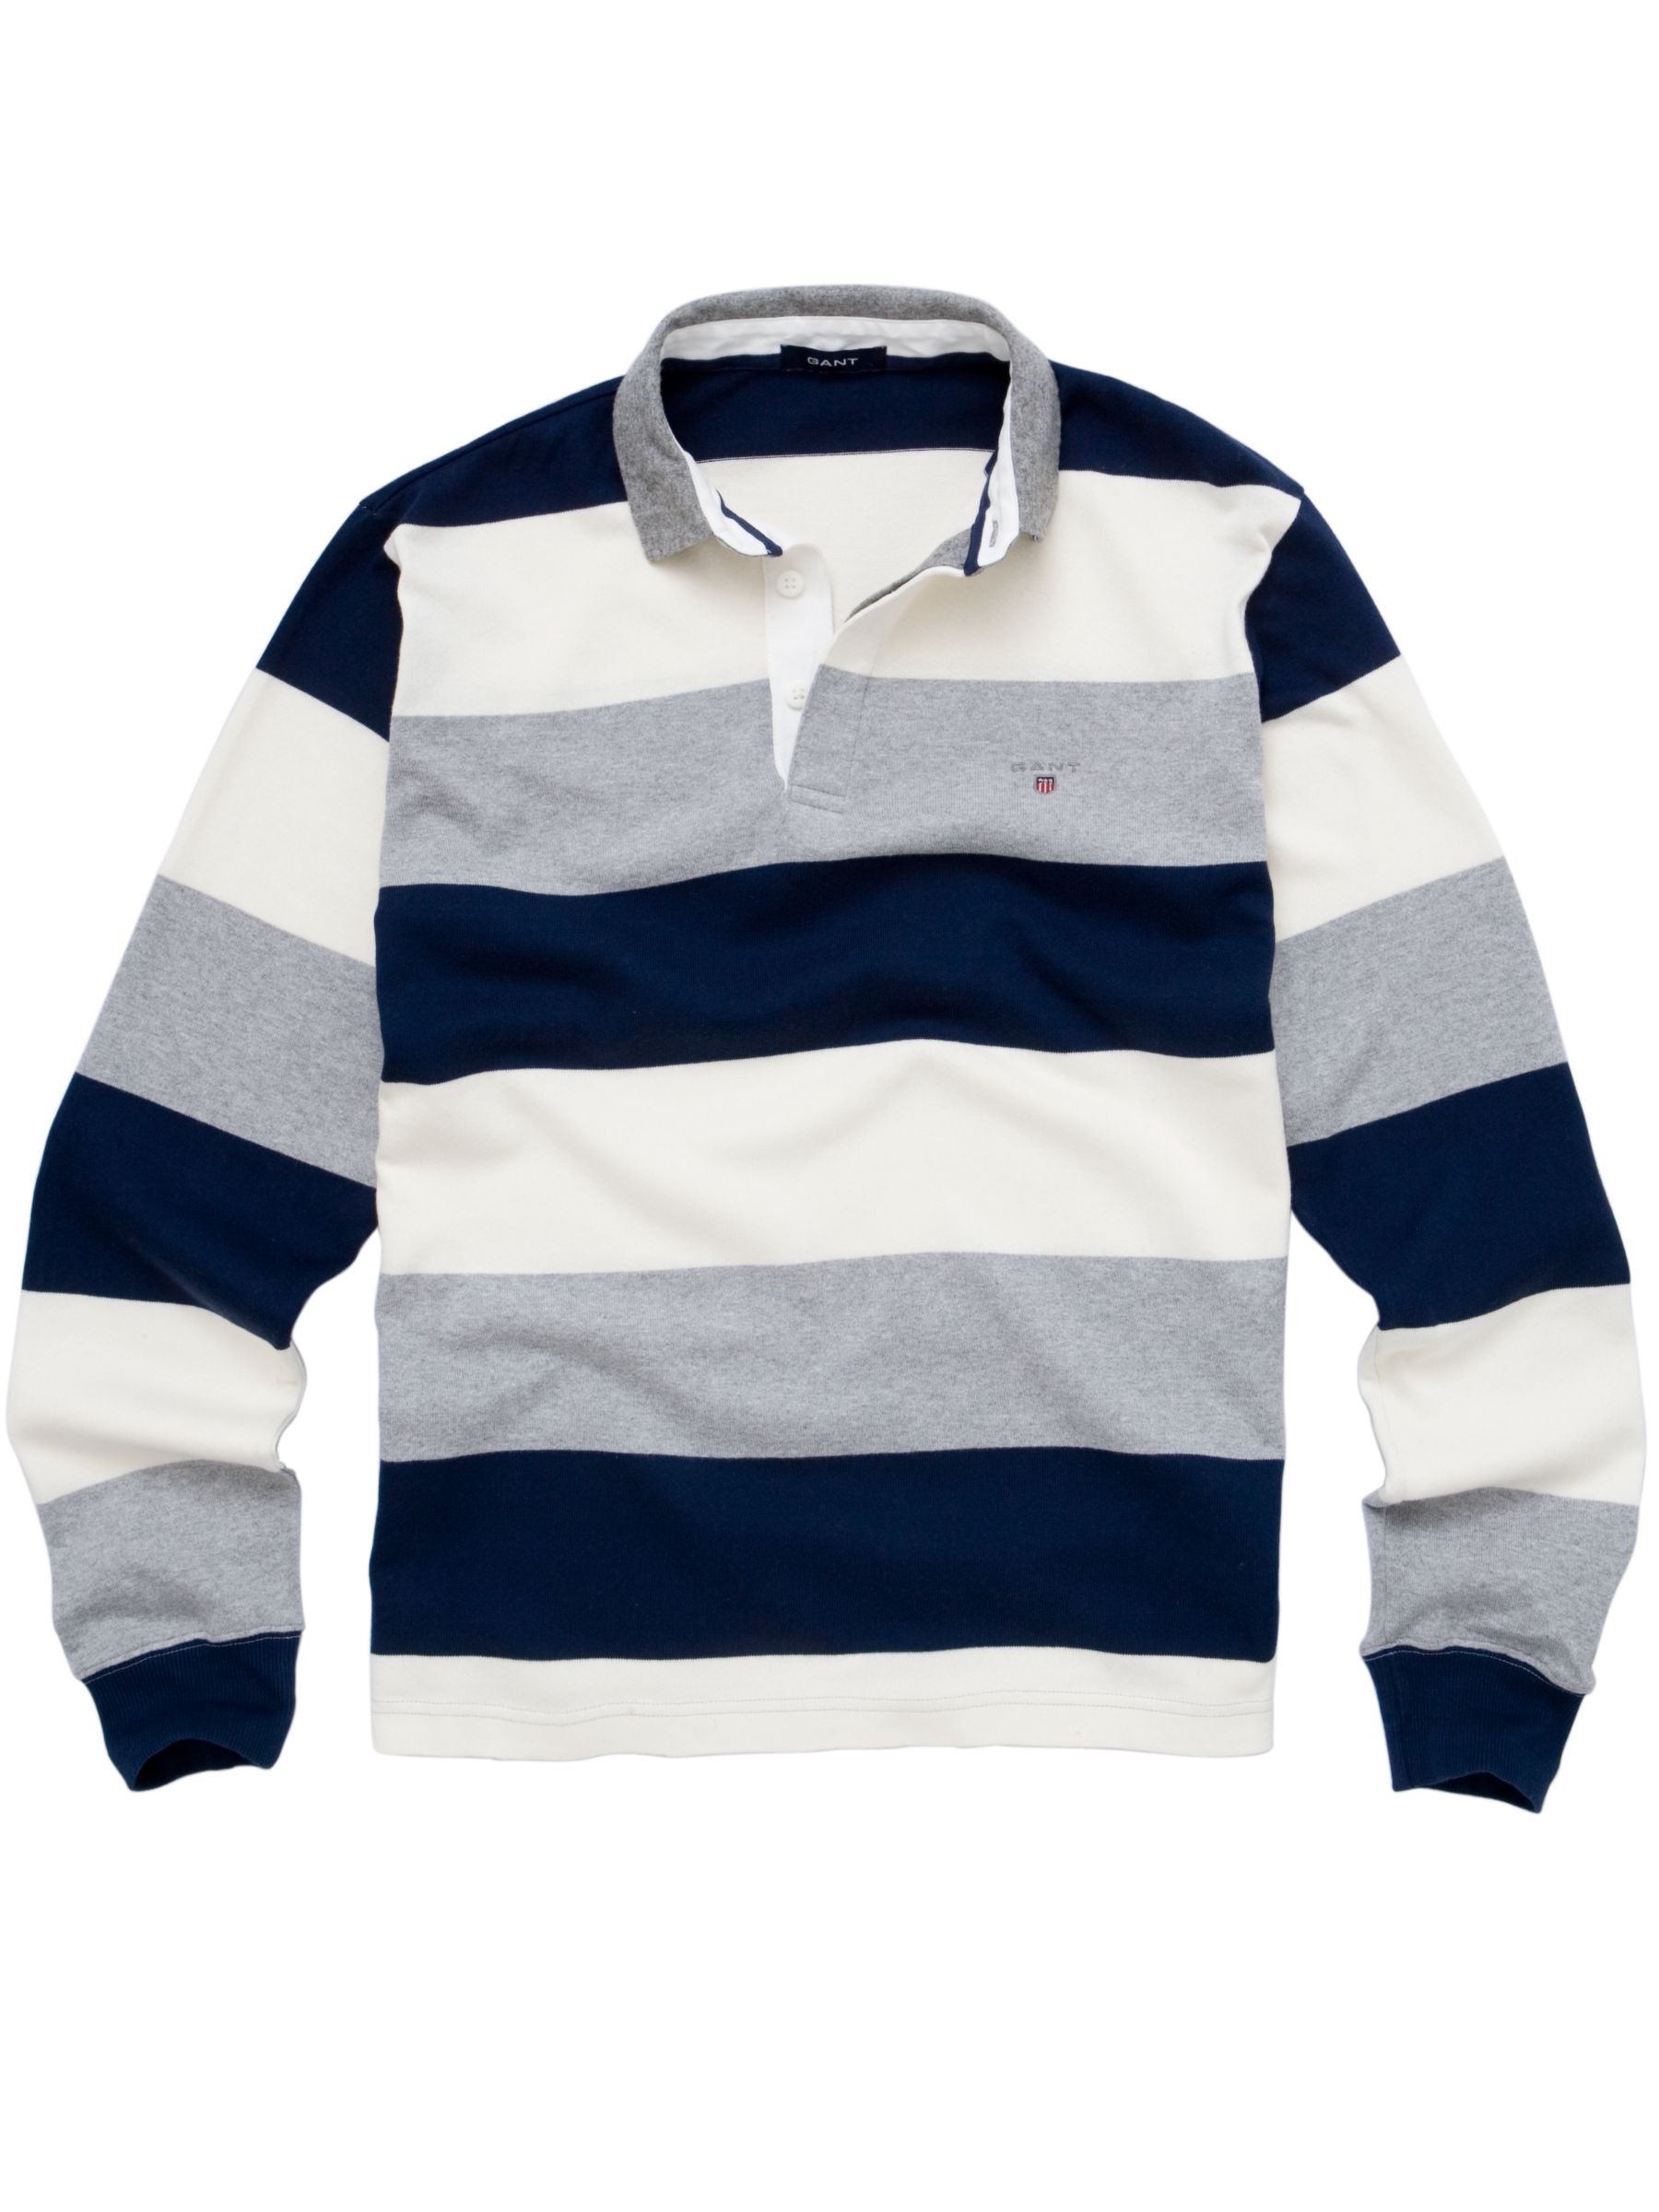 Gant Bar Stripe Rugby Shirt, Light grey